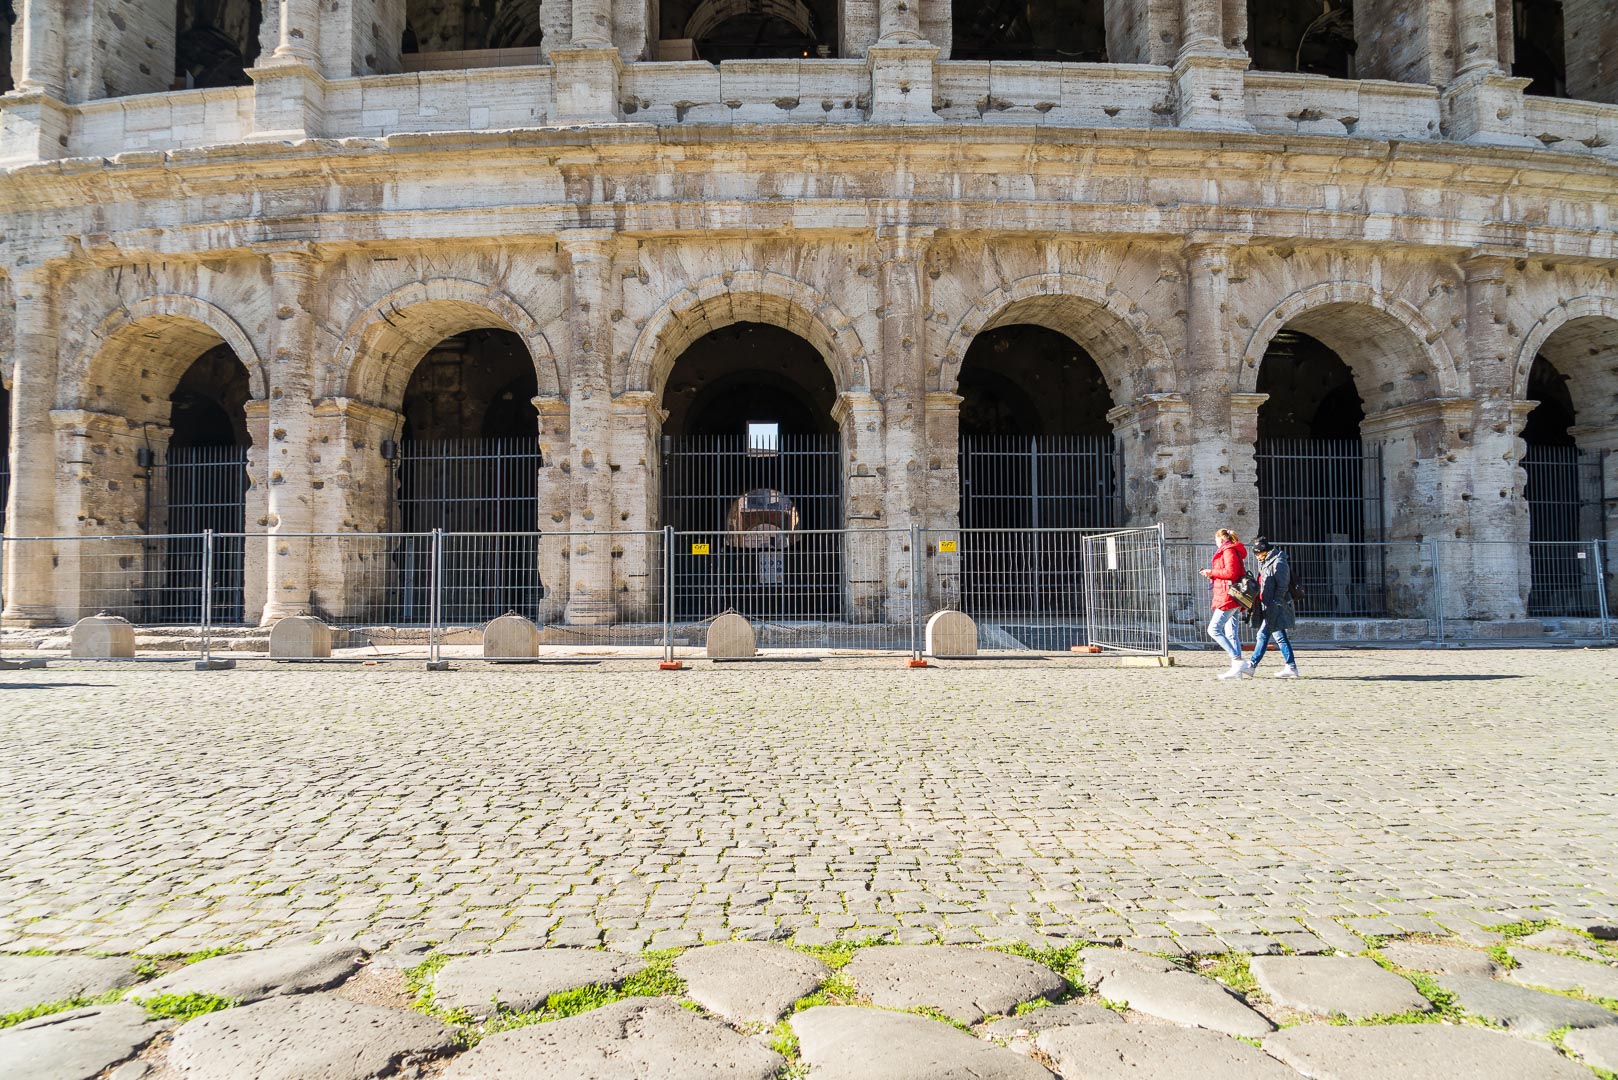 Backplate • ID: 4843 • HDRI Haven - Ruins Of Colosseum